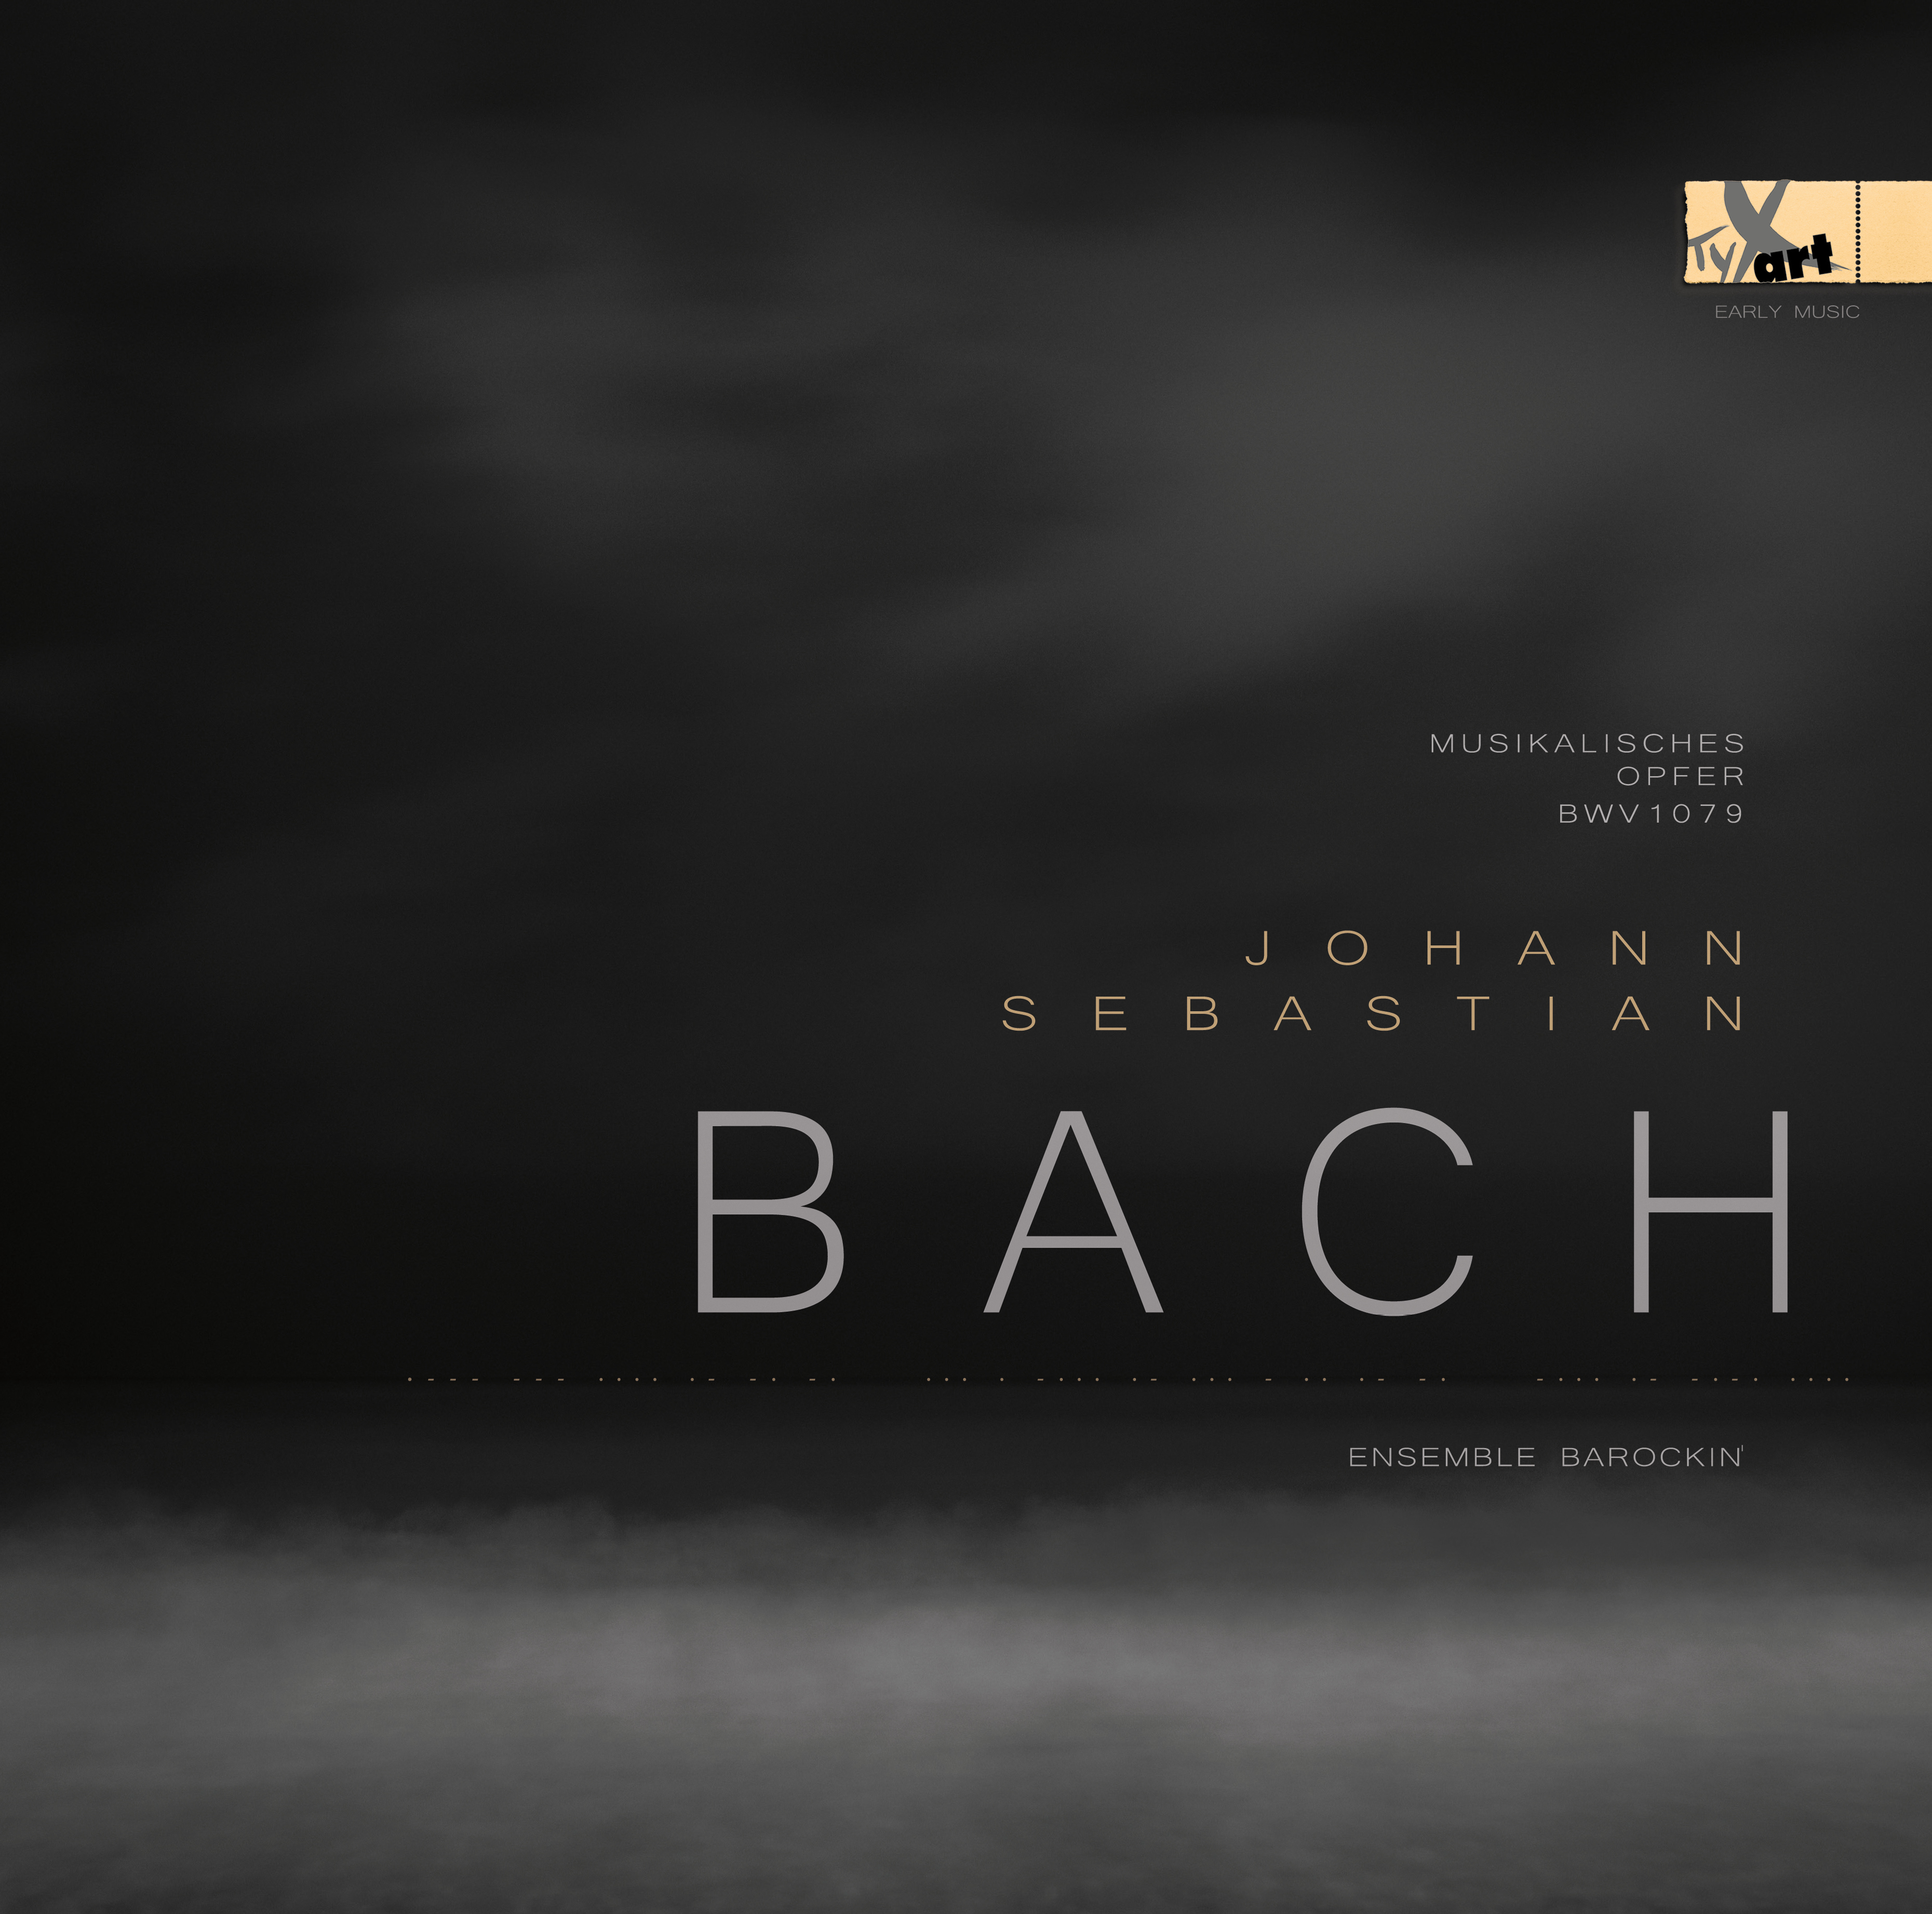 Bach - Musikalisches Opfer / Musical Offering - Ensemble Barockin' - Vinyl